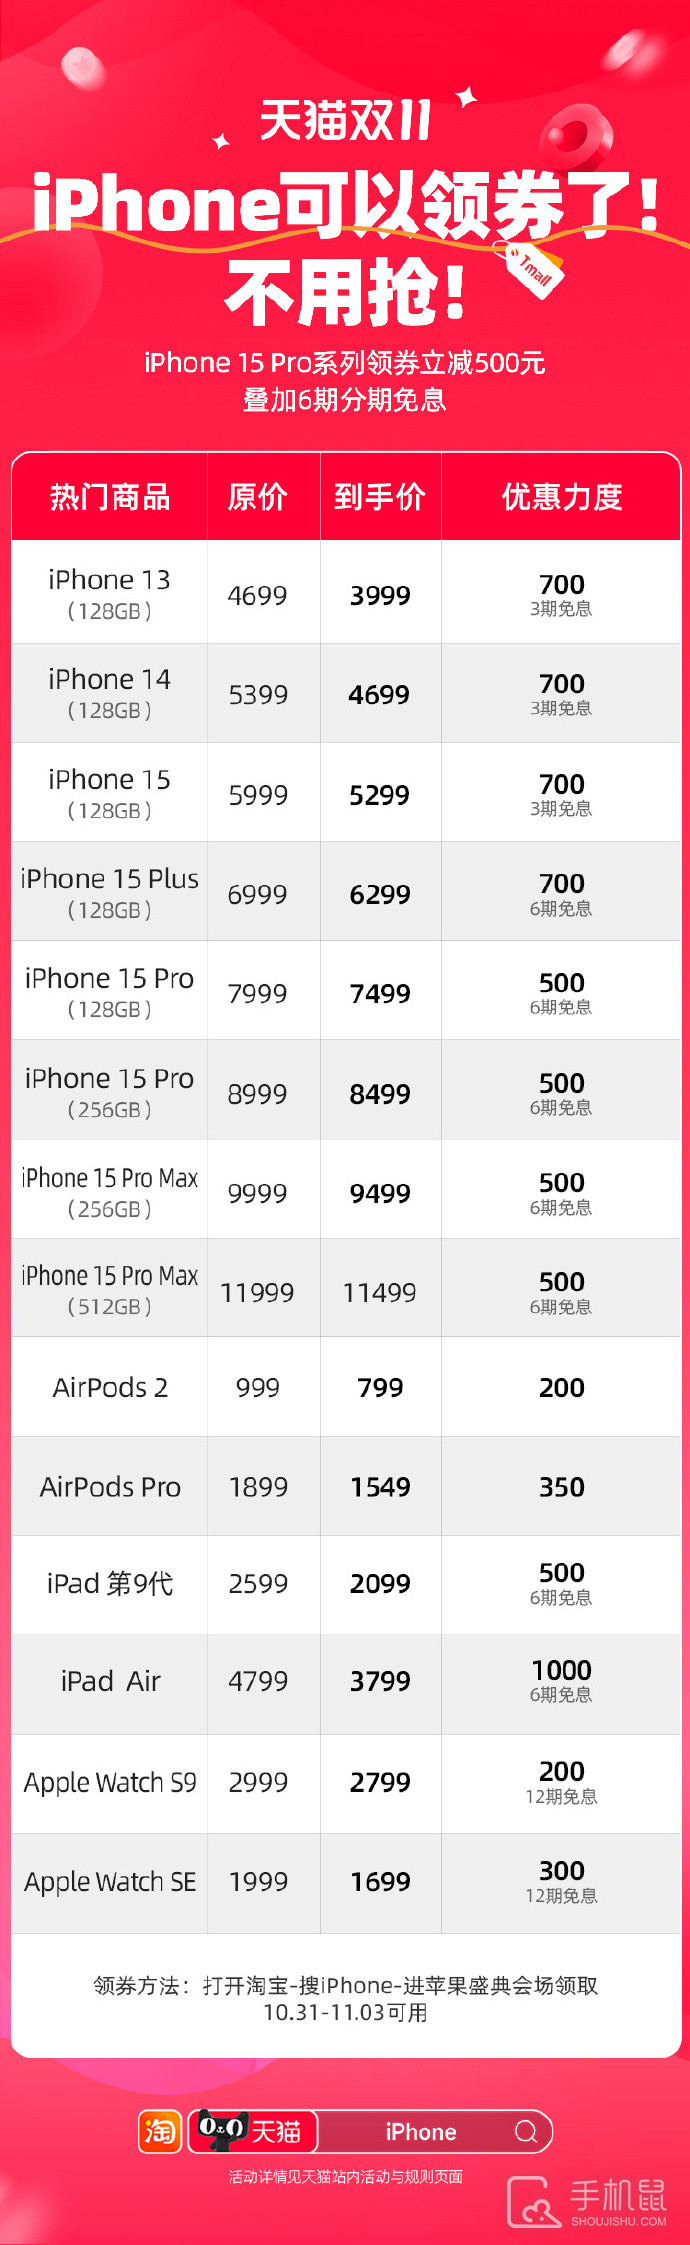 iPhone15Pro双十一会降价吗